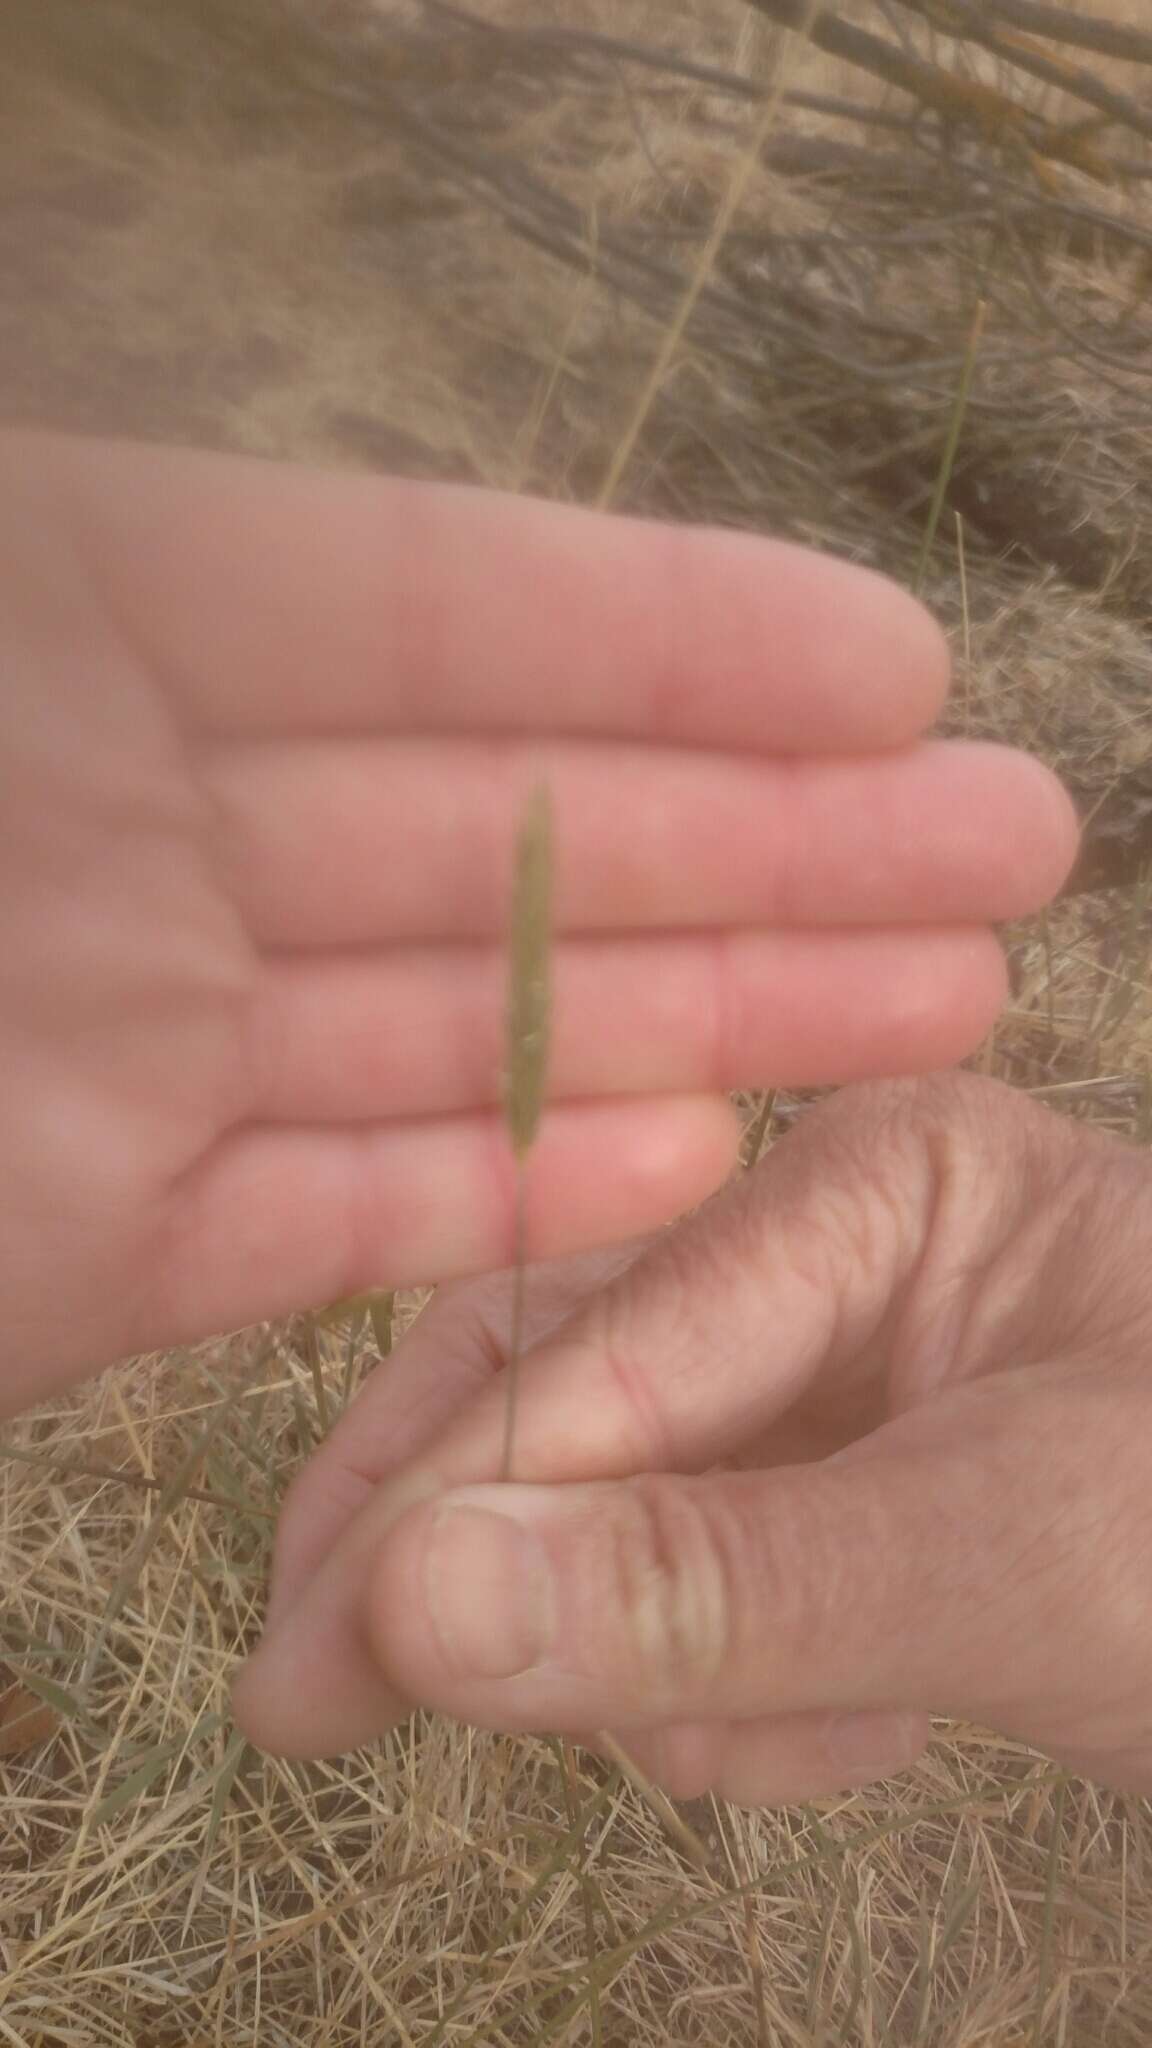 Image of meadow barley